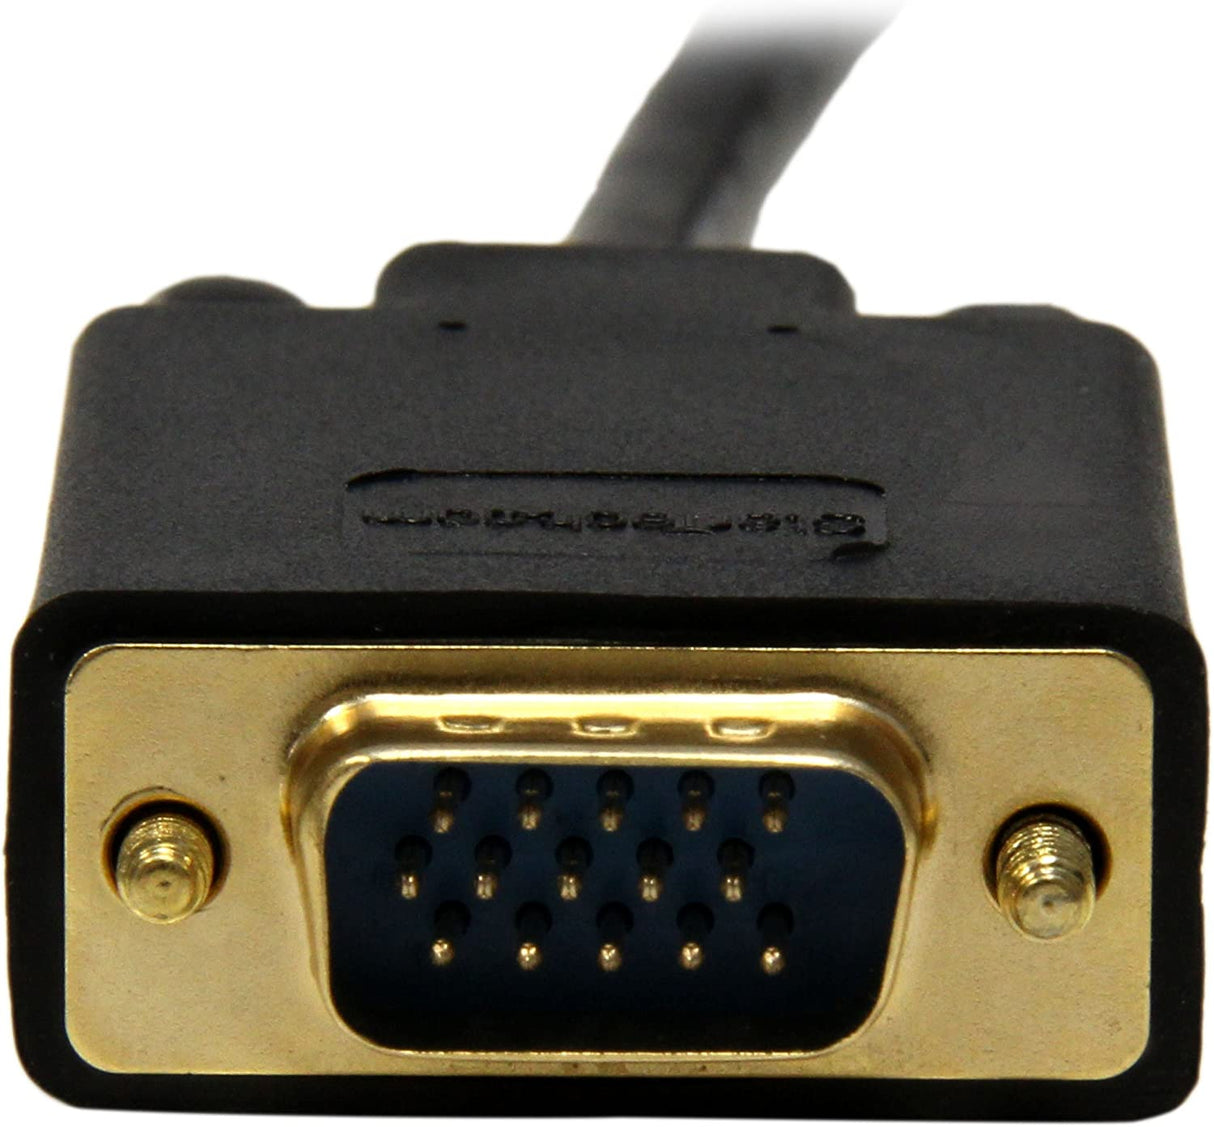 StarTech.com 10 ft Mini DisplayPort to VGA Adapter Cable - mDP to VGA Video Converter - Mini DP to VGA Cable for Mac/PC 1920x1200 - Black (MDP2VGAMM10B)